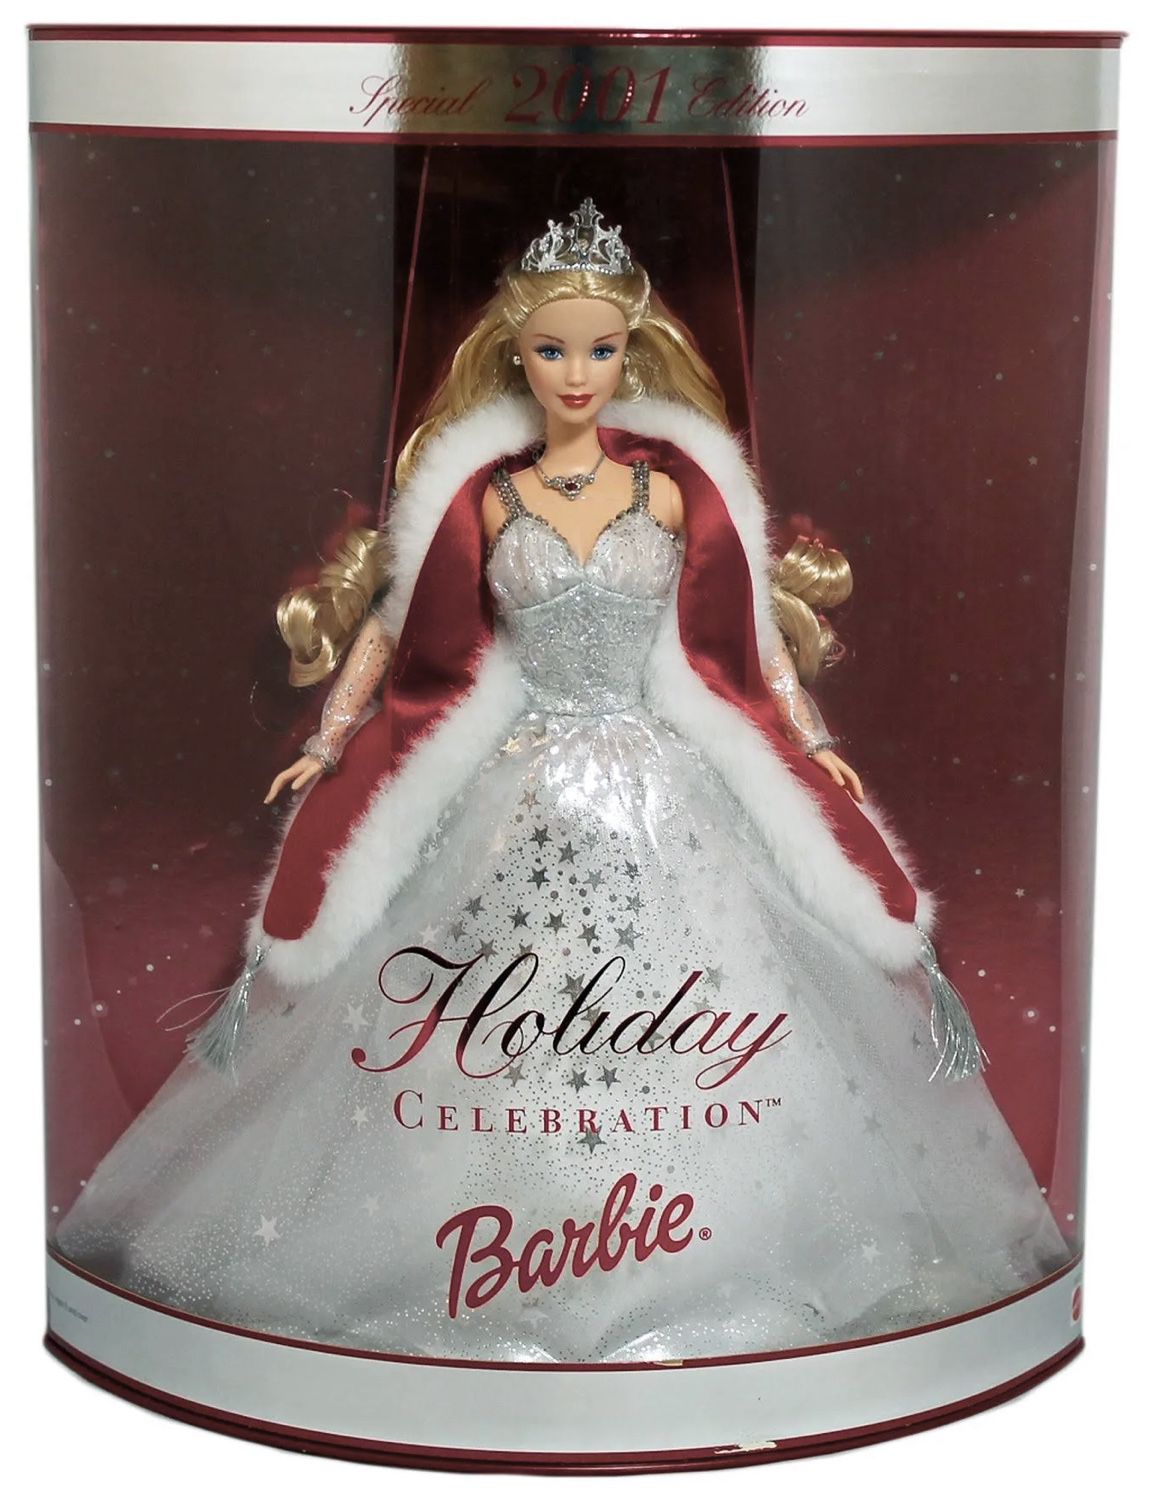 Special Edition 2001 Barbie Holiday Celebration